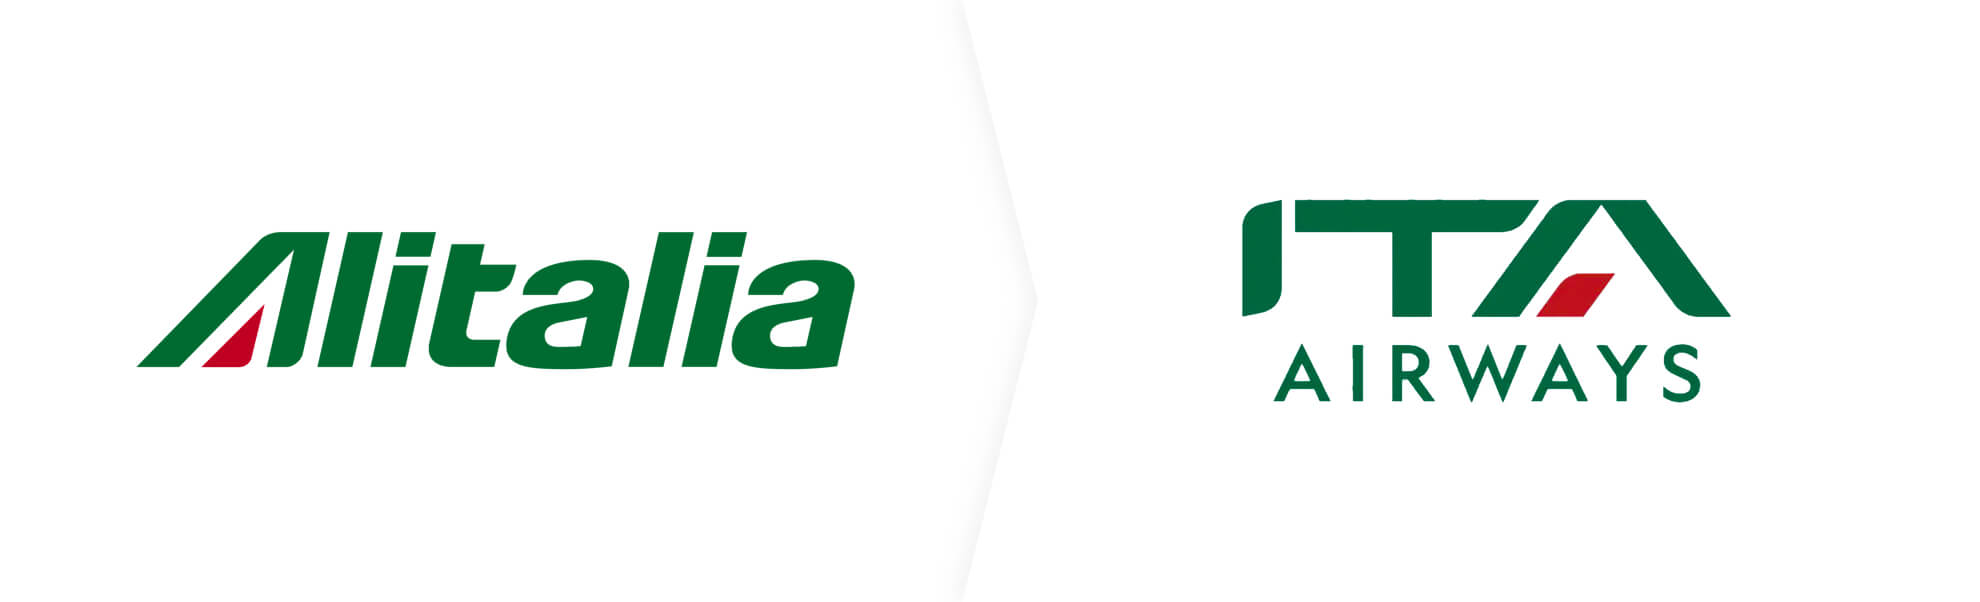 alitalia zmienia się w ita airways logo redesign rebranding